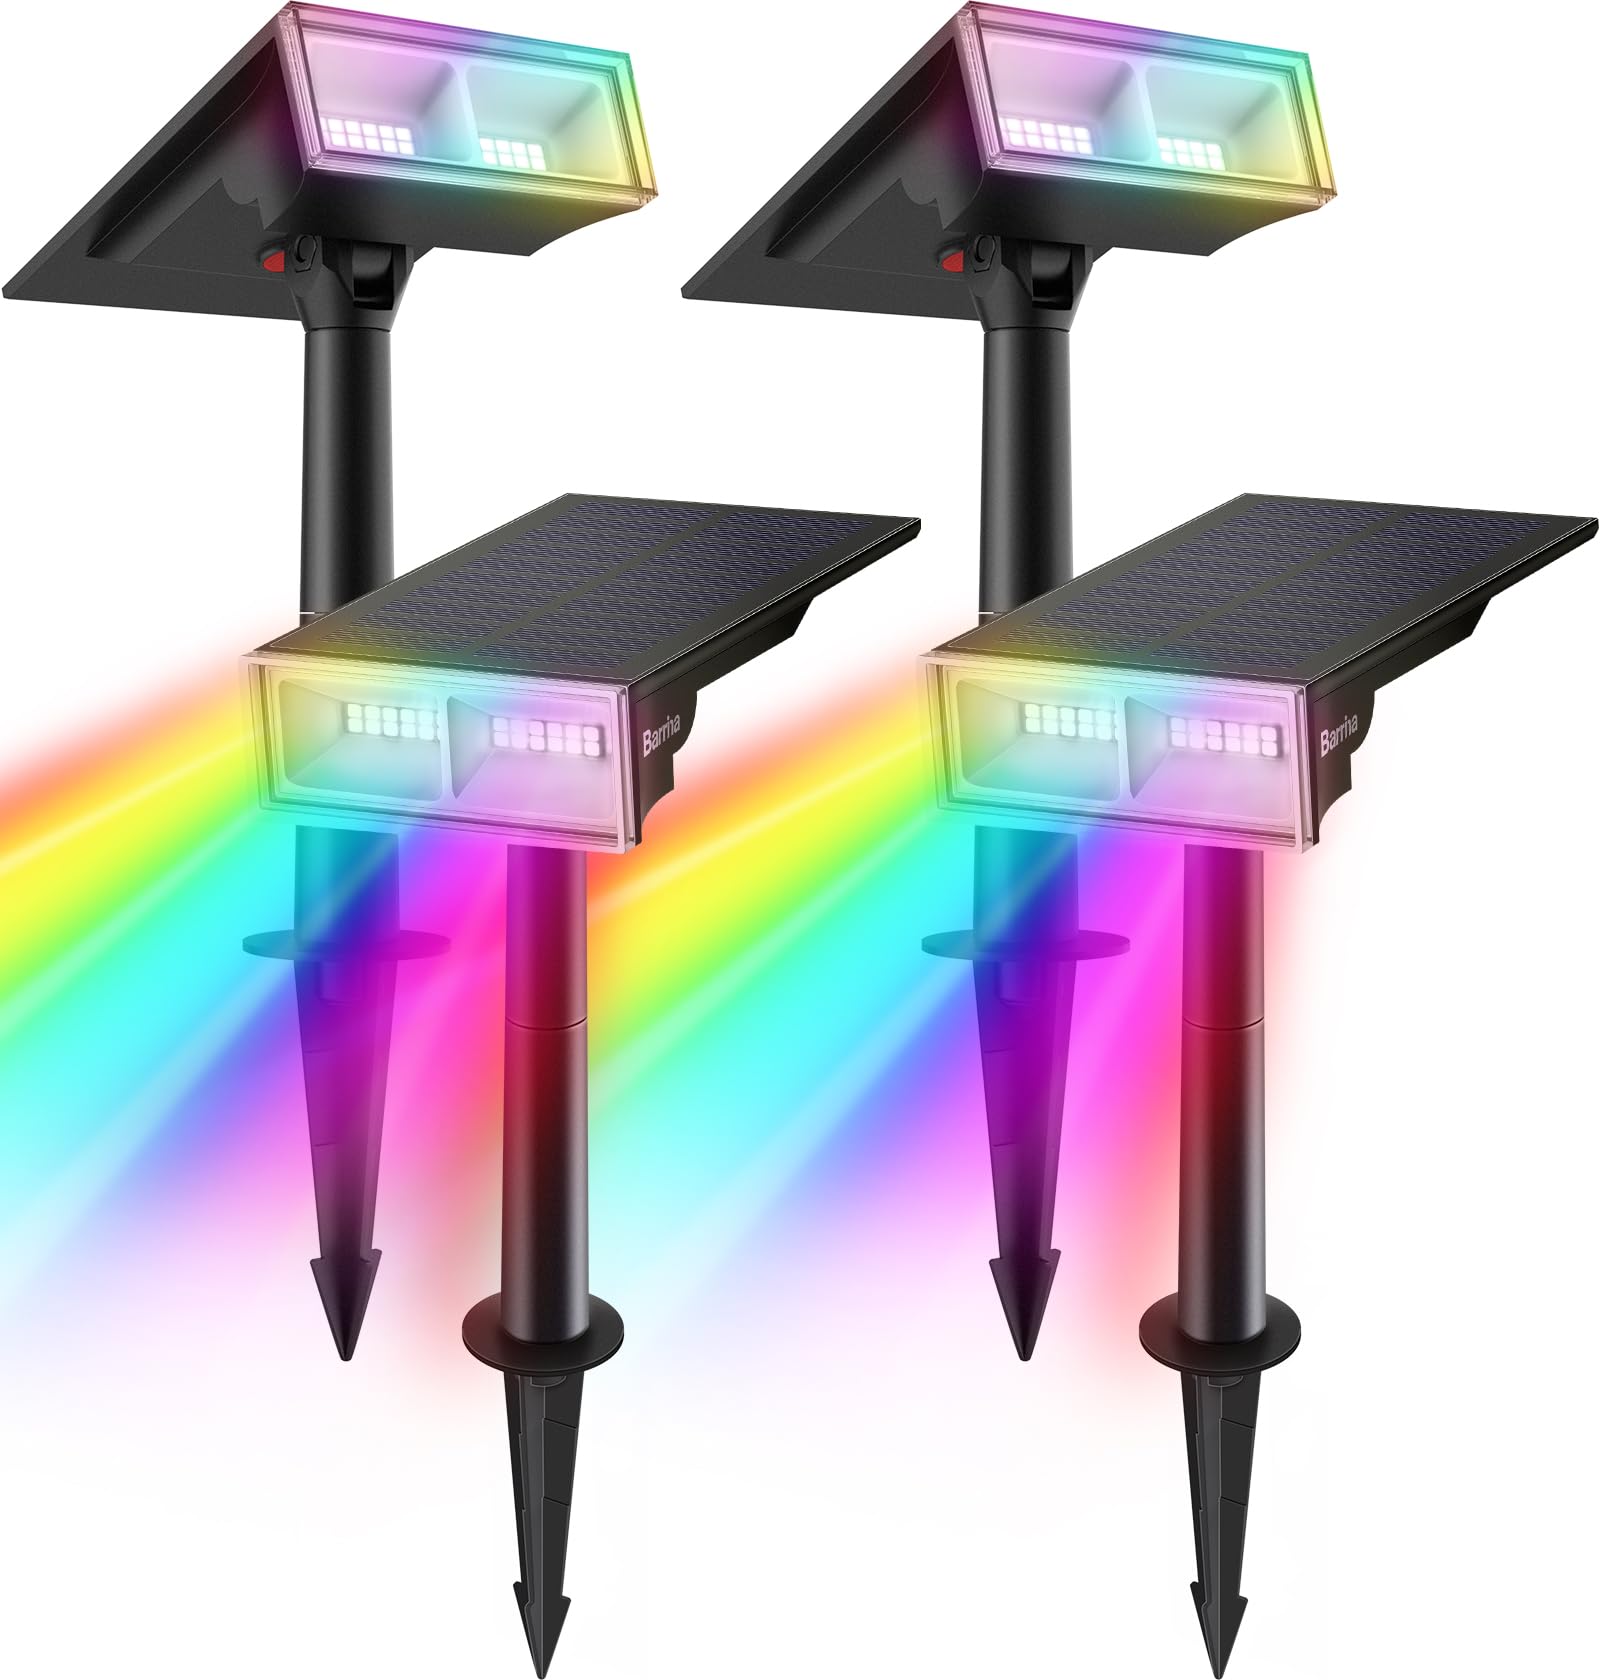 Solar Spot Lights,RGB 8 Colorful Modes,Auto ON/OFF,24 LEDs,4 Packs,TYN RGB 4 - Barrina led